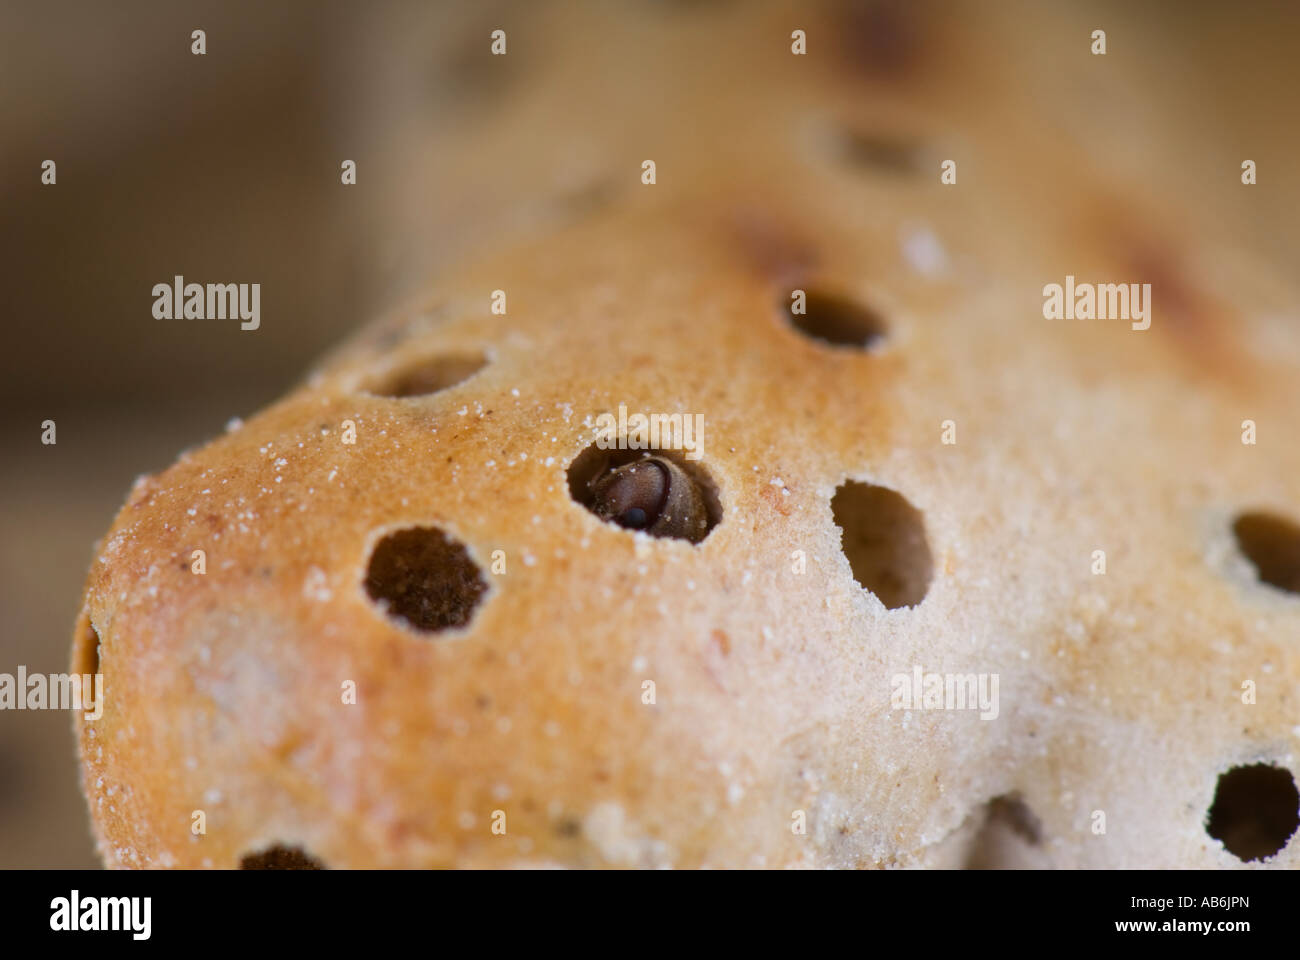 Biscuit beetle in biscuit Stock Photo